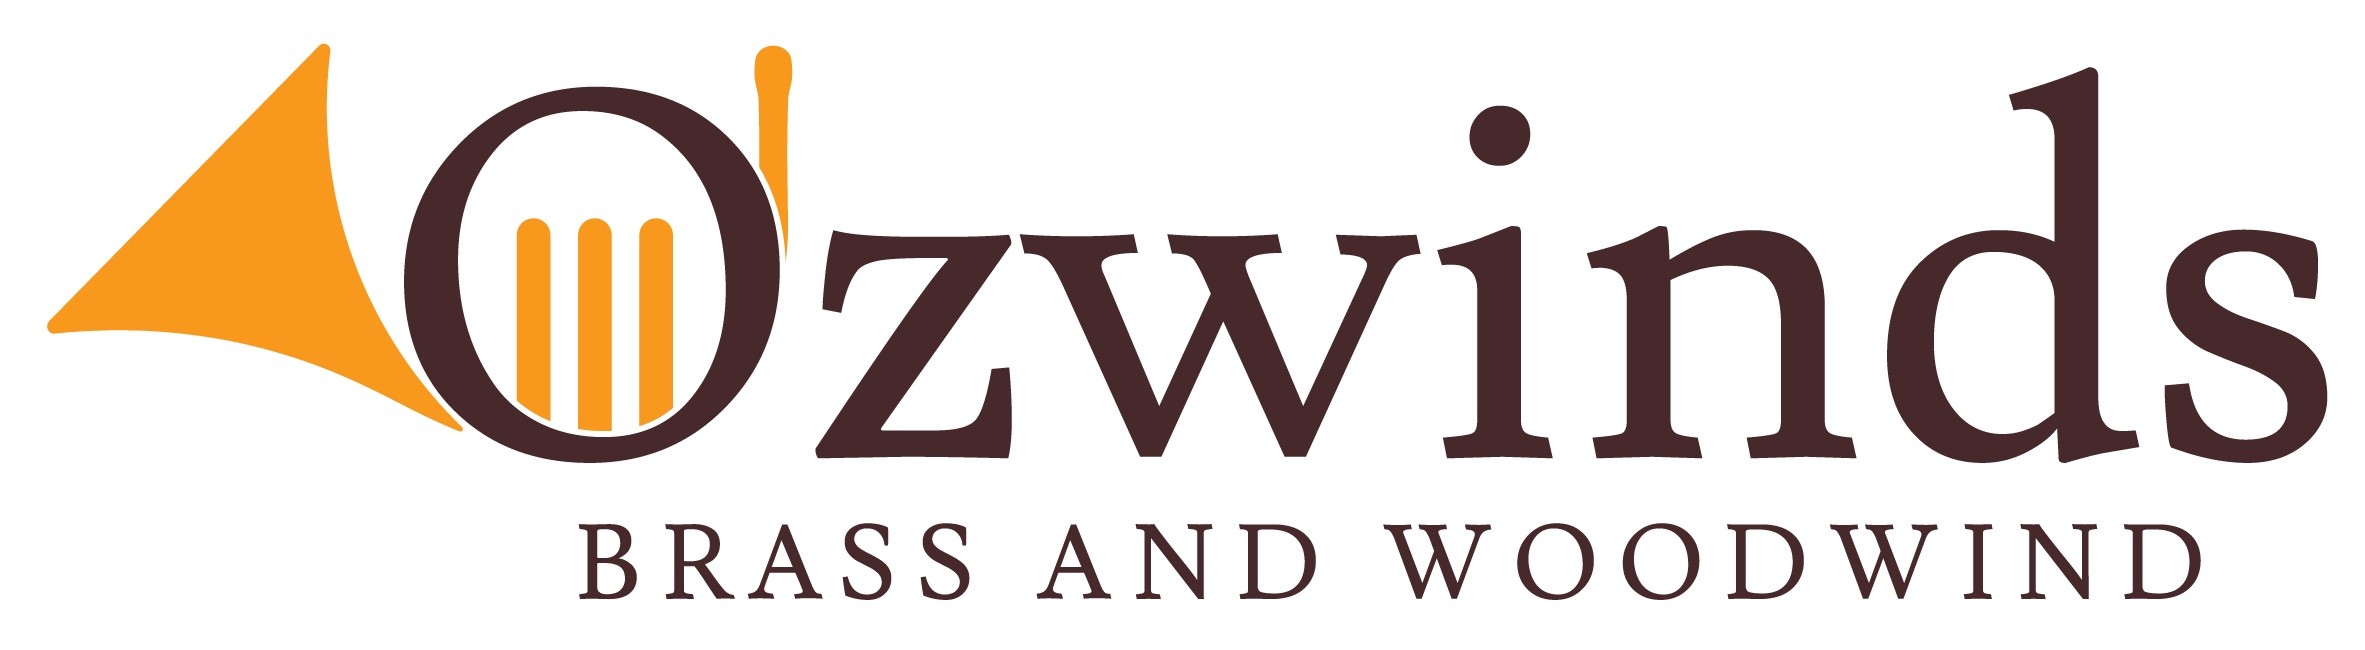 Ozwinds - Brass & Woodwind - COBURG